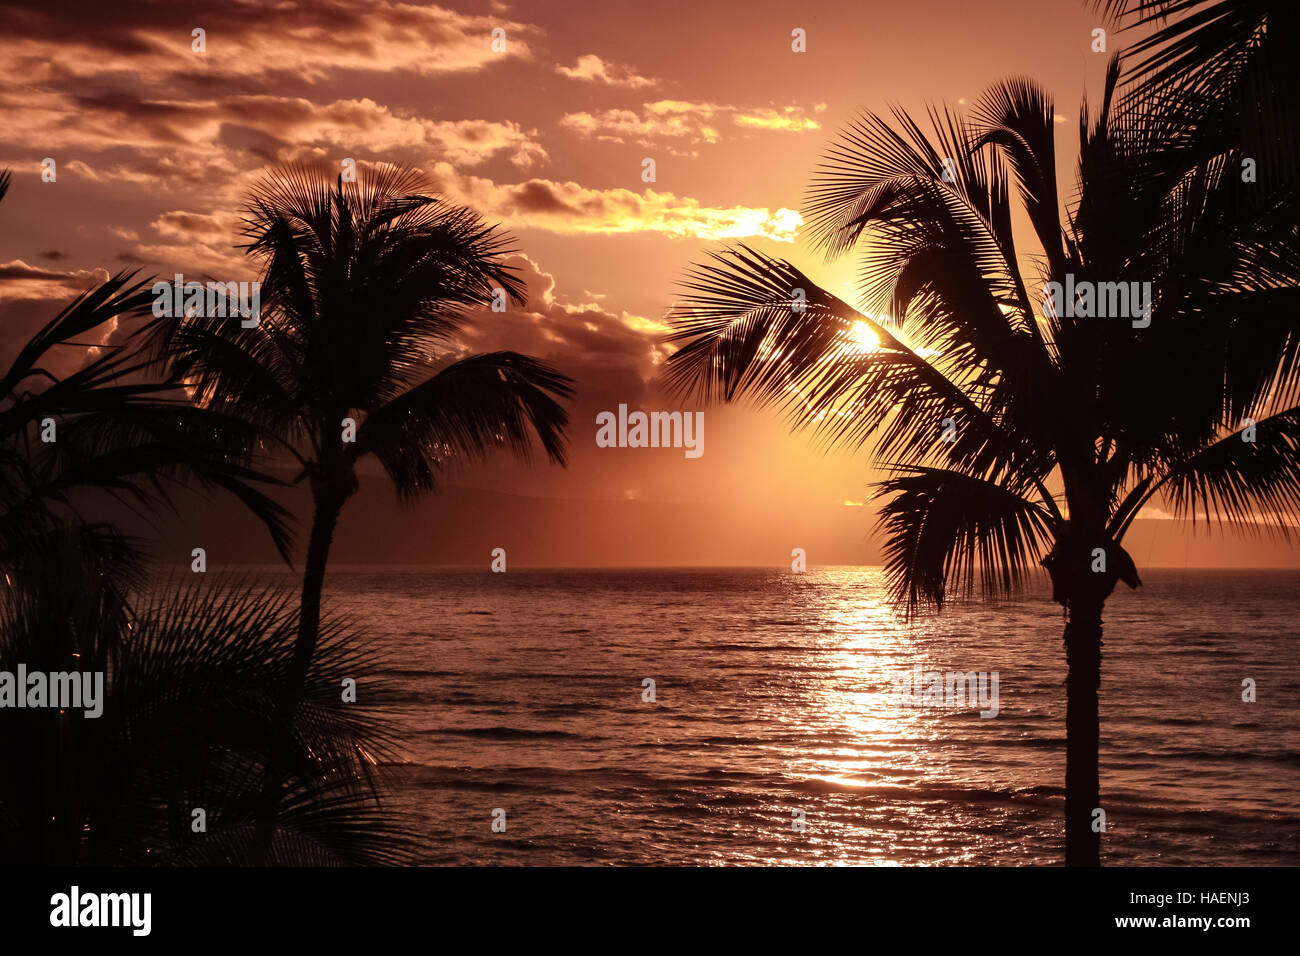 Palm Tree Silhouette gegen Sonnenuntergang Himmel und Ozean in Maui, Hawaii - mit Blick auf Insel Lanai Stockfoto